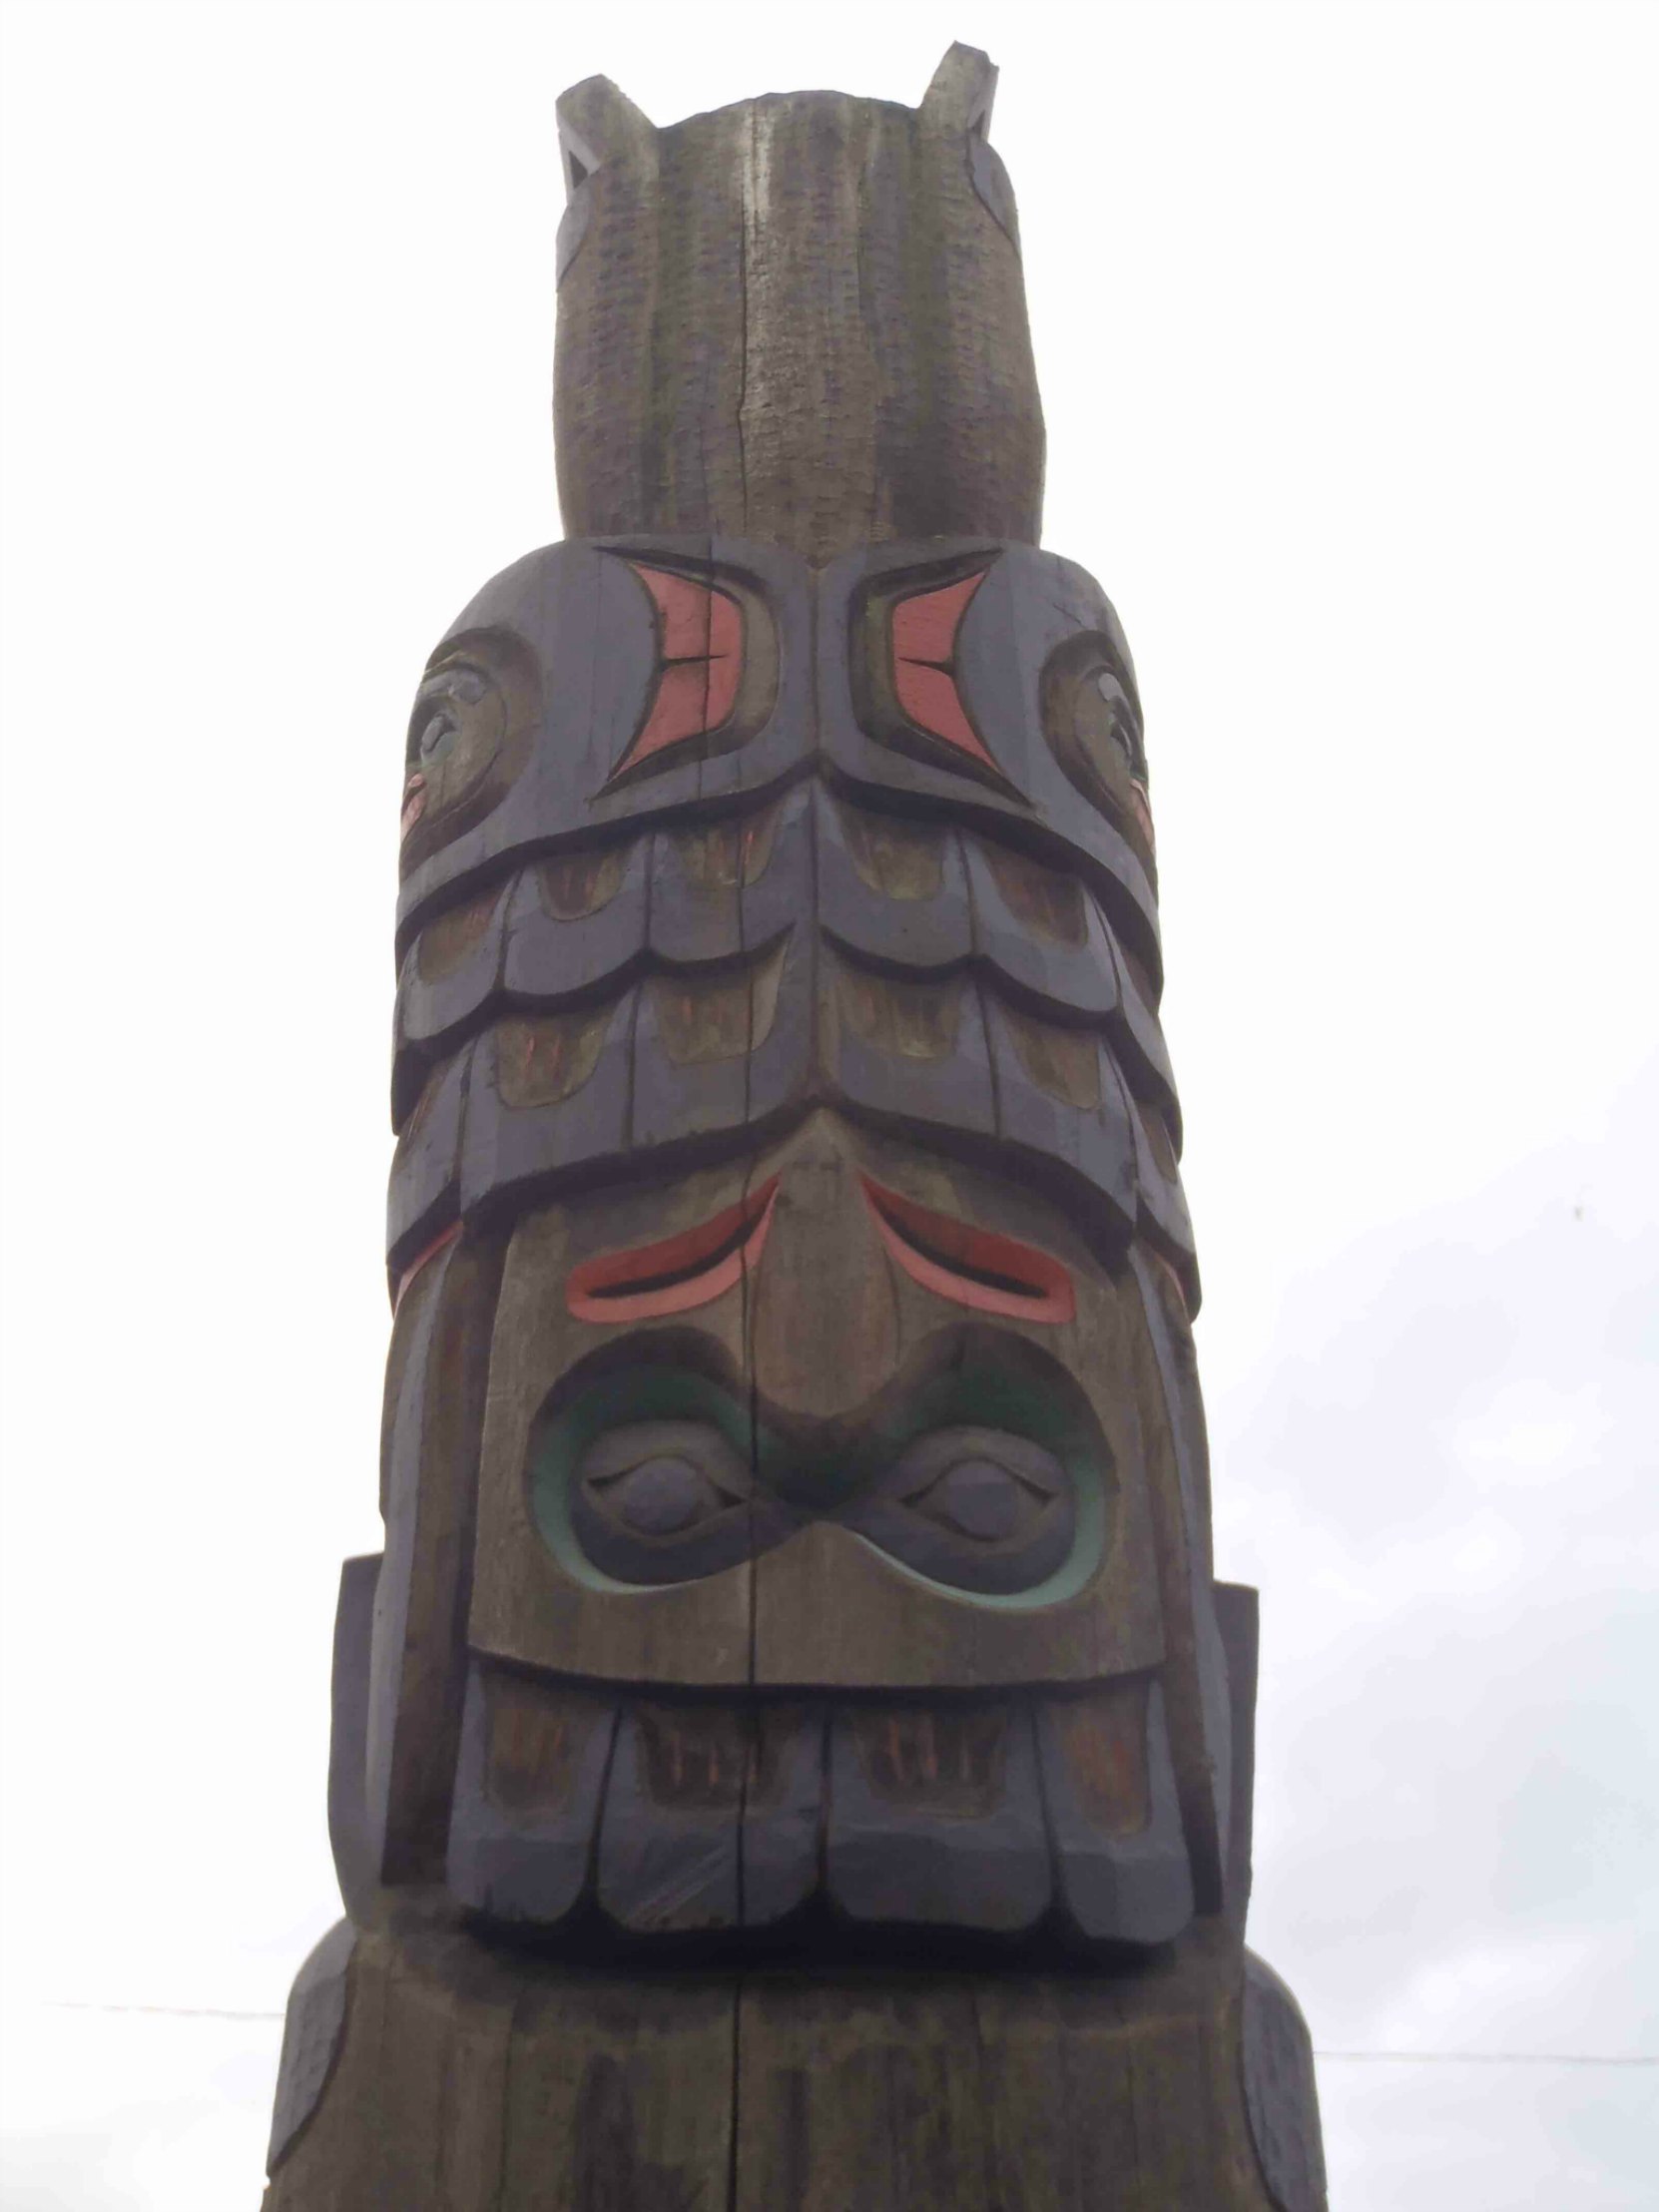 Wind Spirit totem pole, rear detail of Thunderbird figure, Station Street, Duncan, B.C.